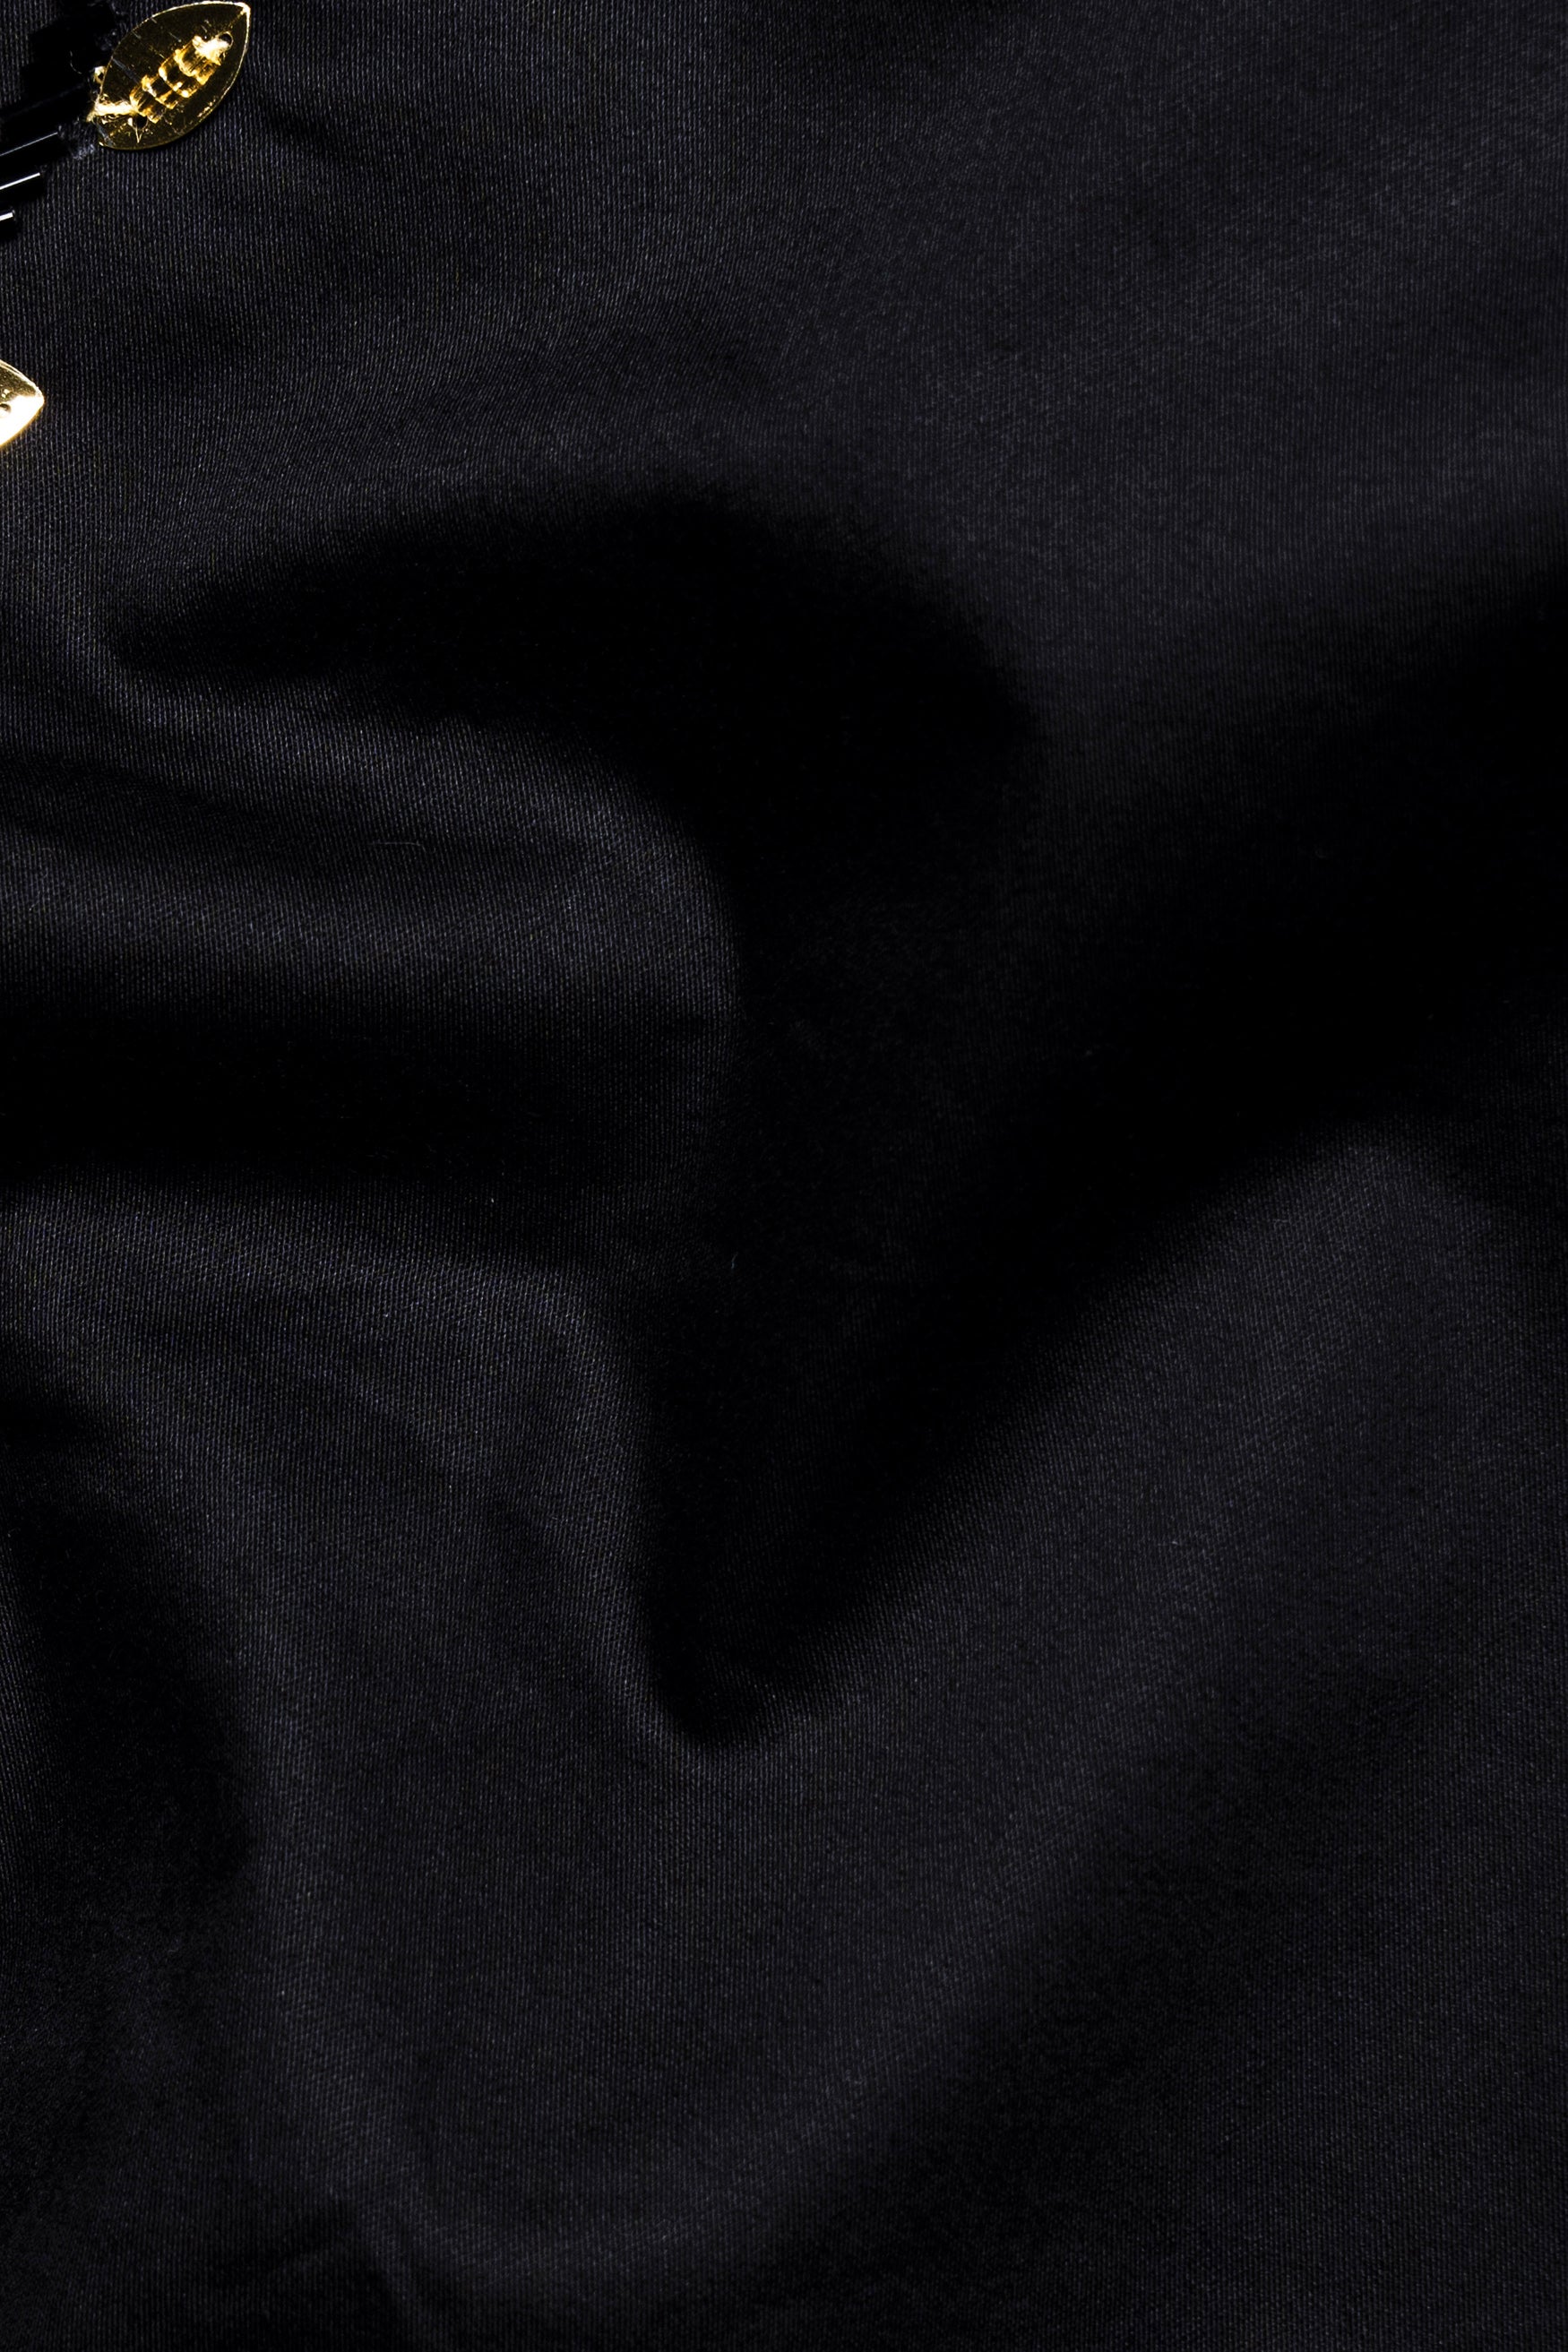 Jade Black Leaves Hand Work Subtle Sheen Super Soft Premium Cotton Designer Shirt